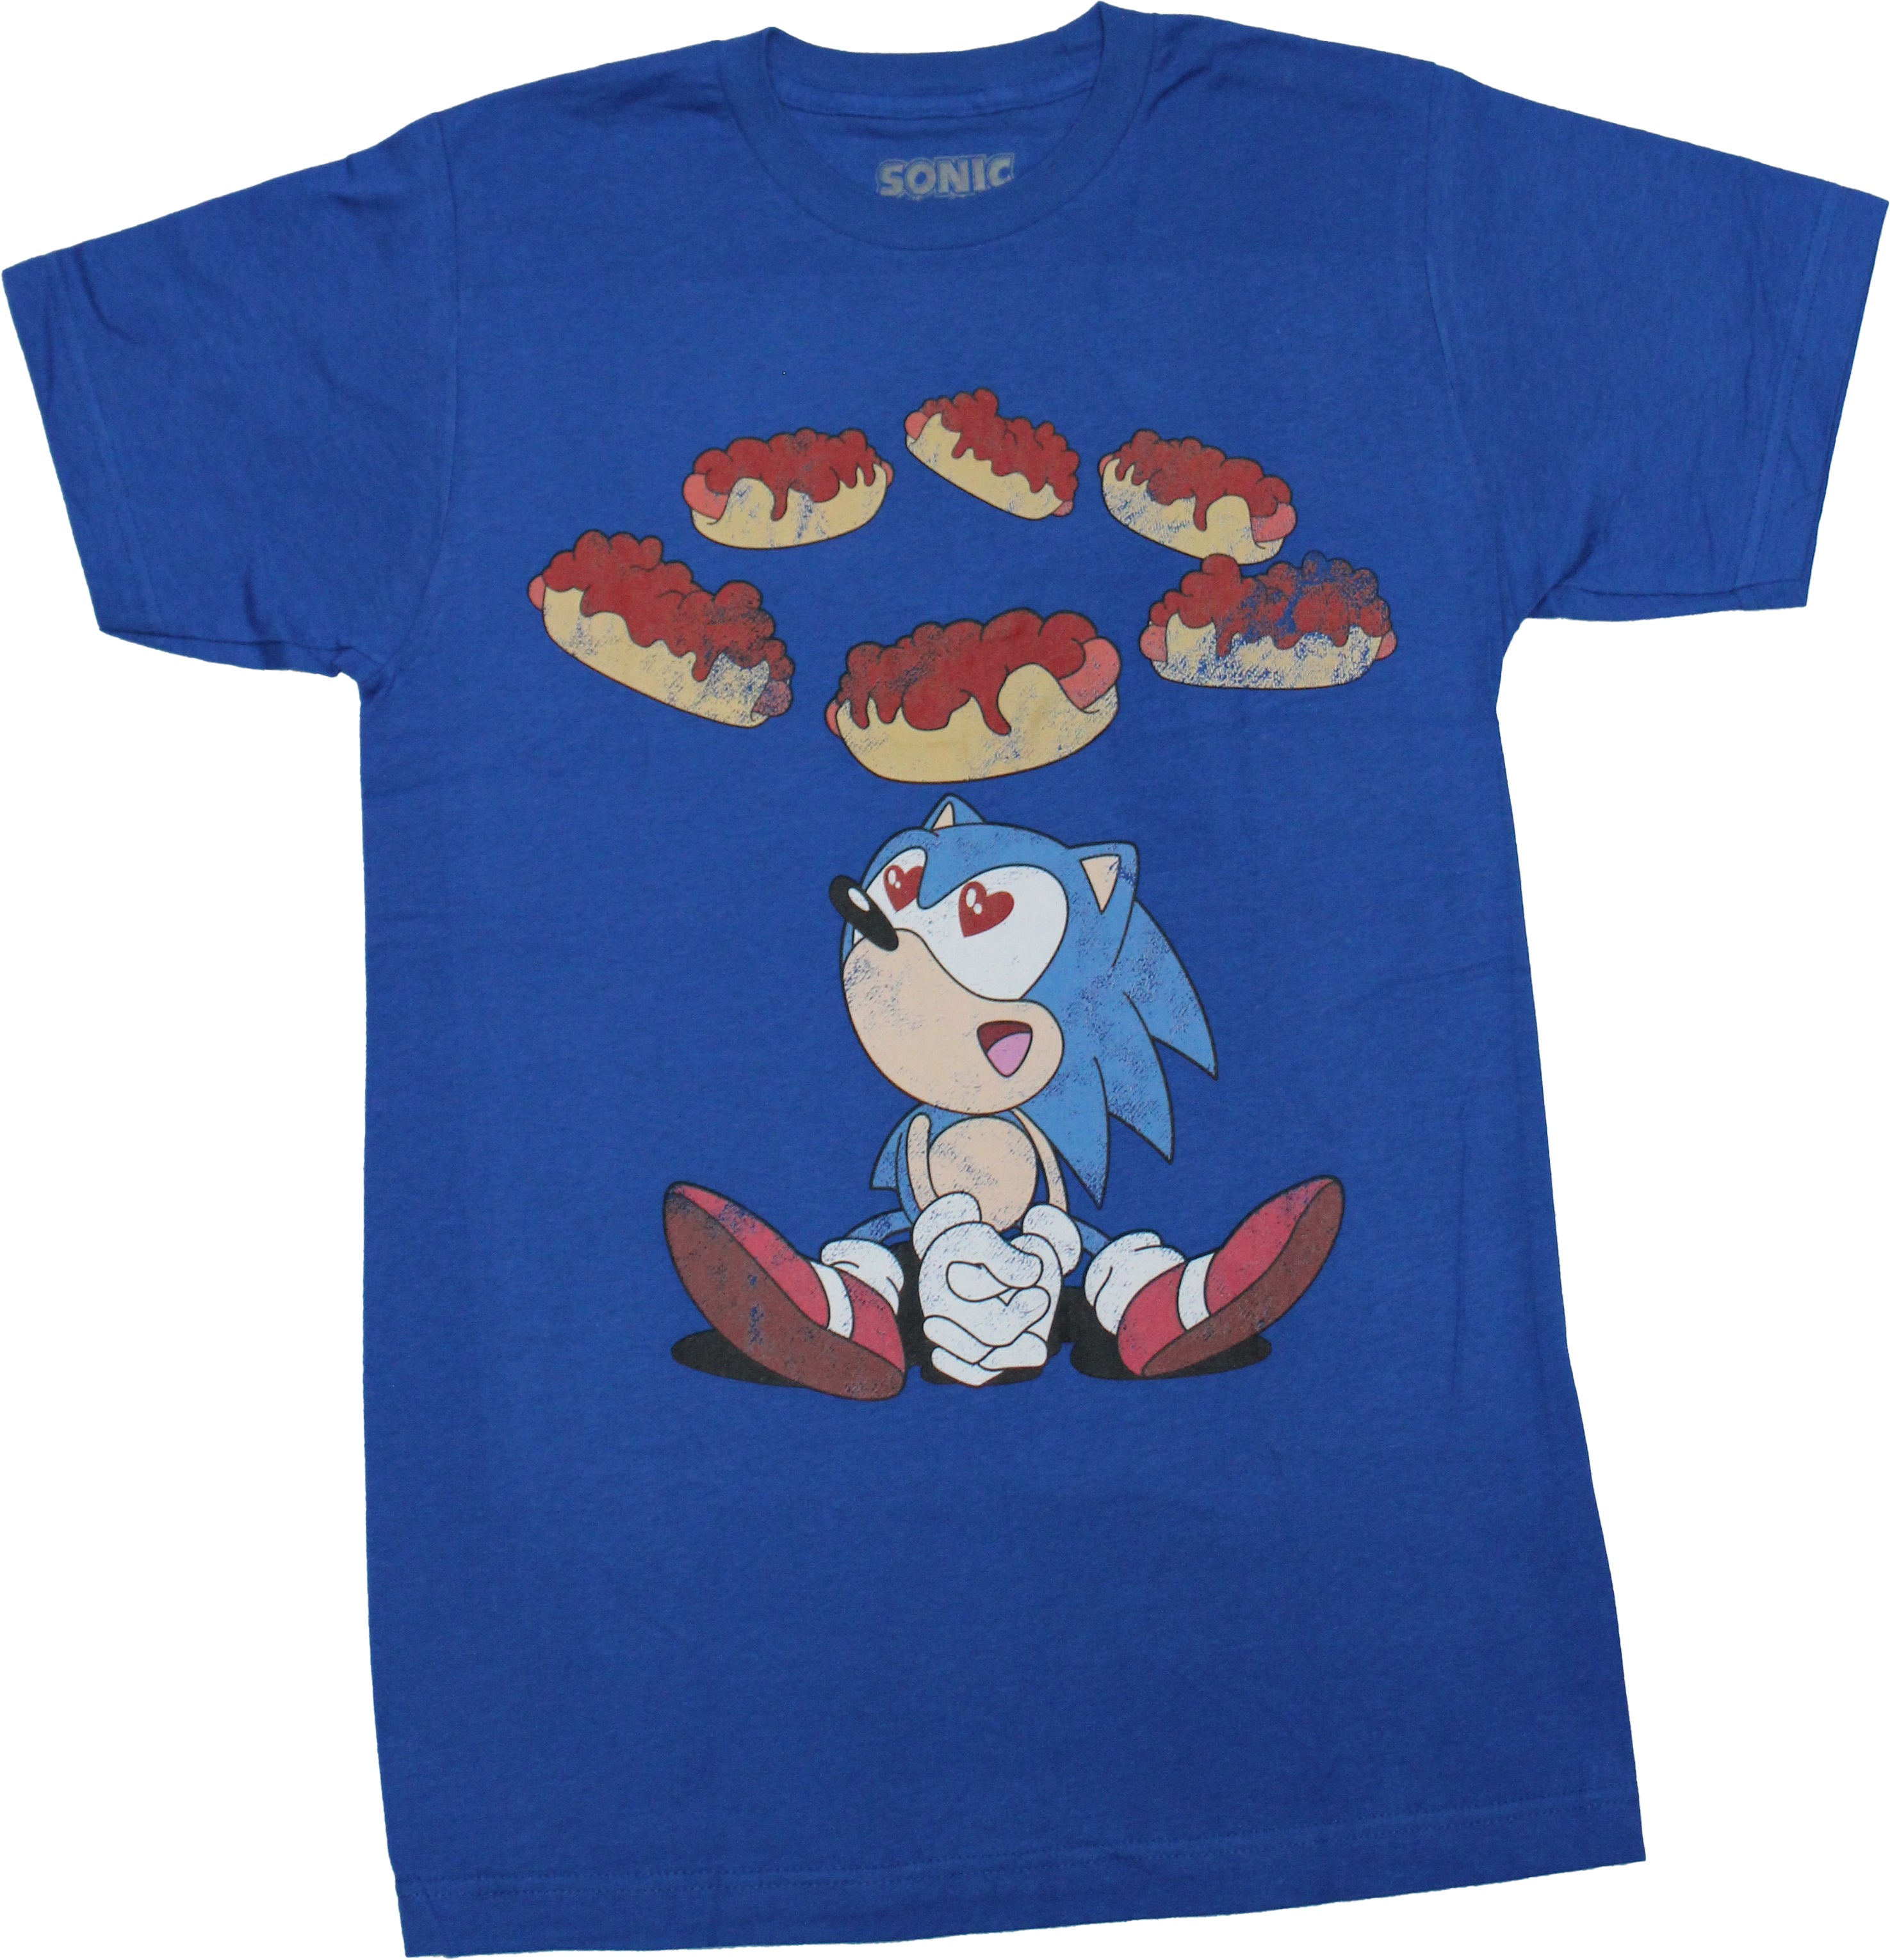 Sonic the Hedgehog Mens T-Shirt- Sitting Under Floatig Hot Dogs